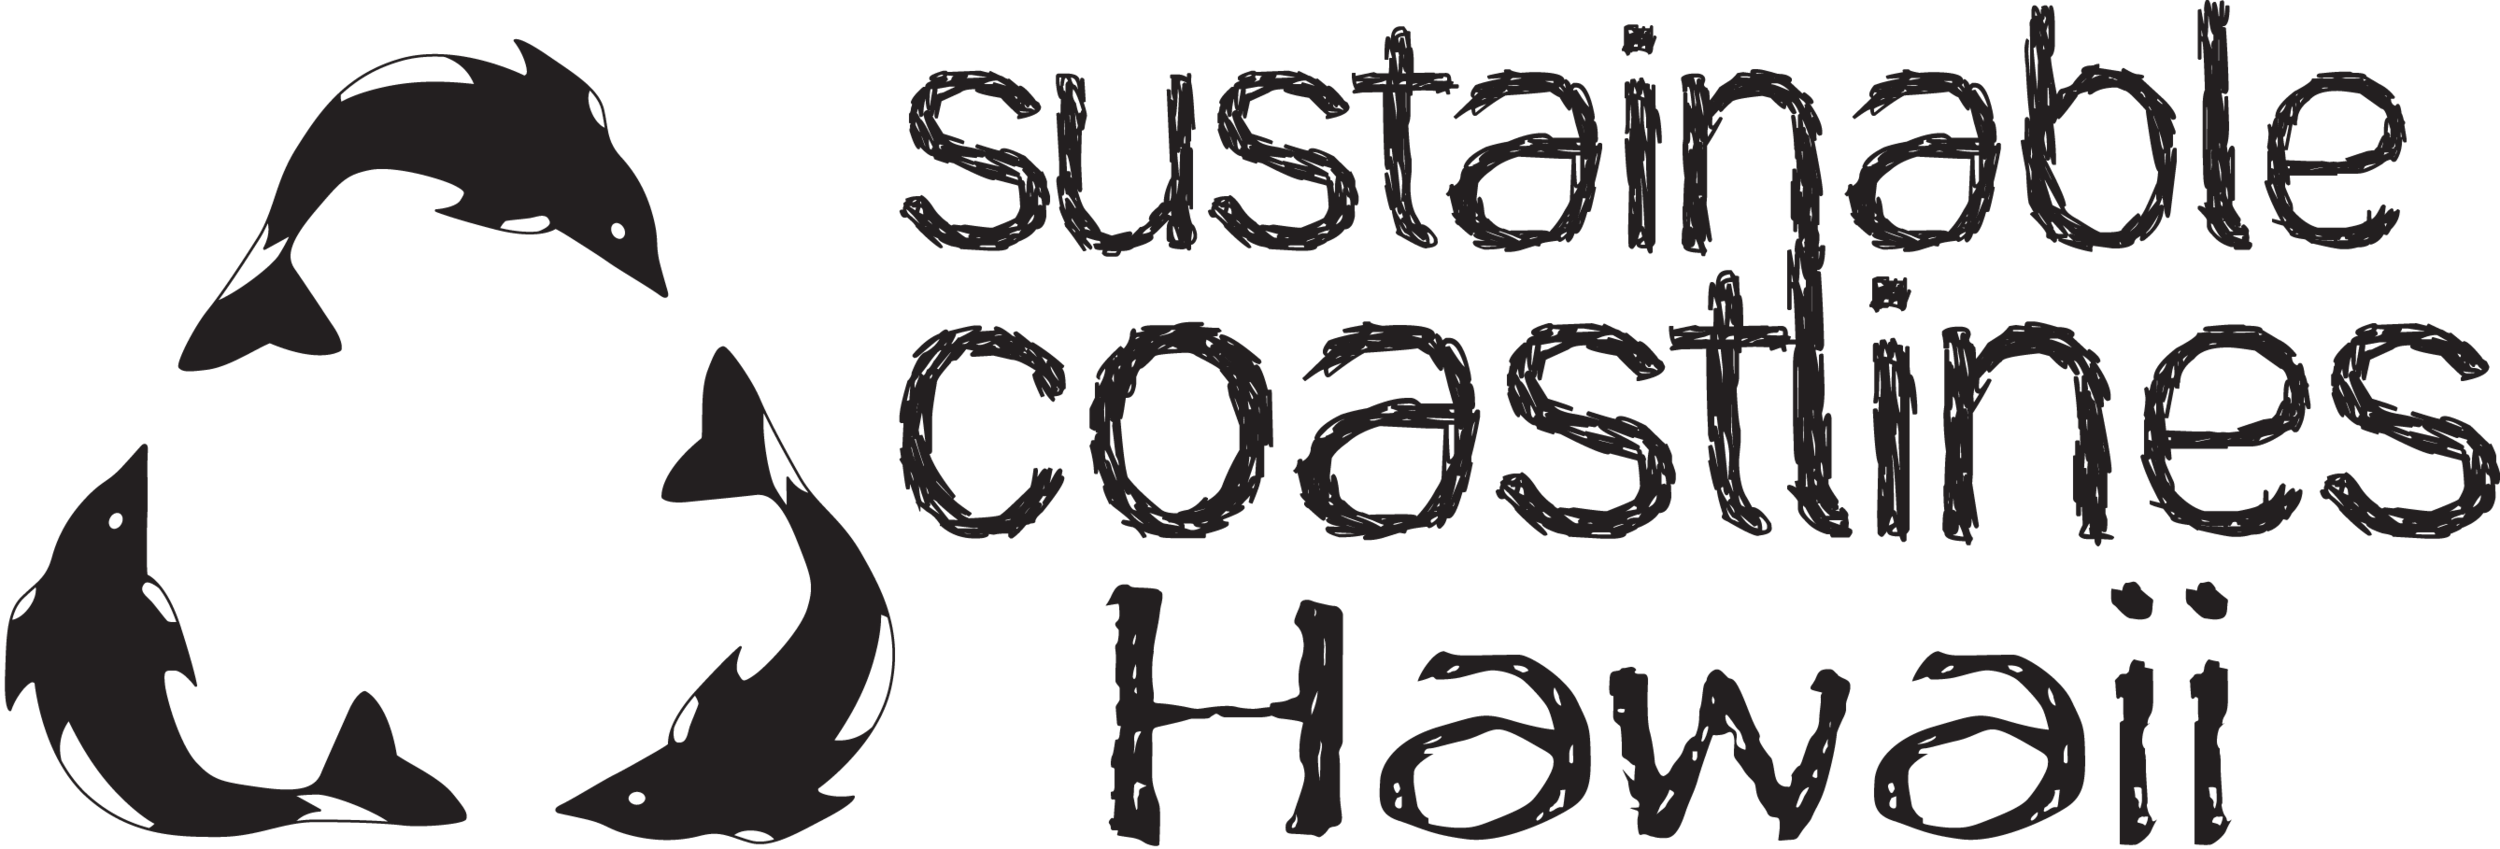 sustainable_coastlines_hawaii_logo.png